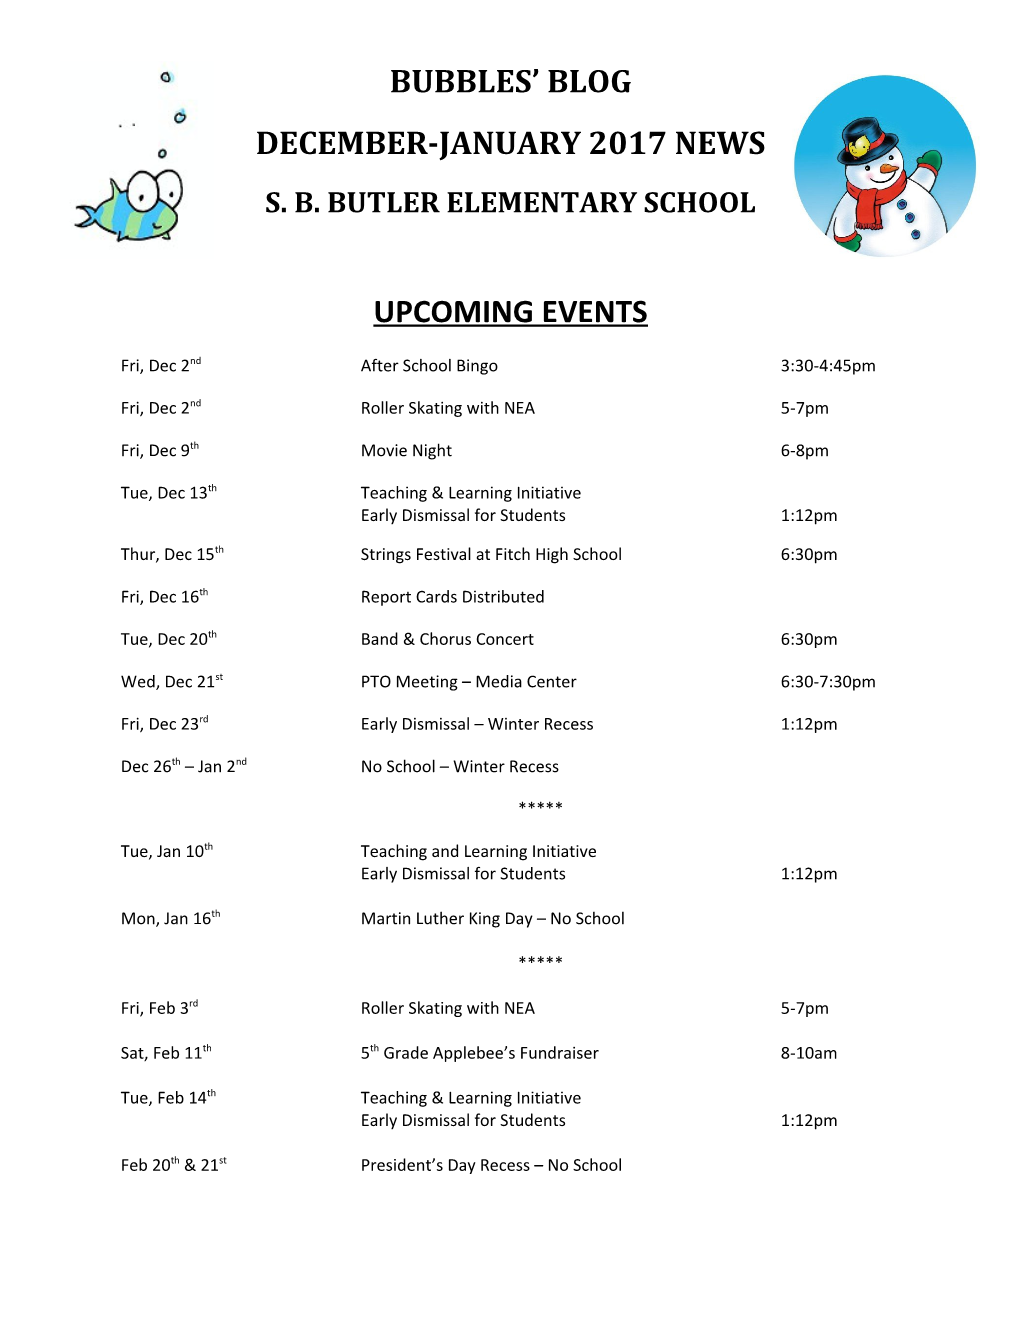 S. B. Butler Elementary School